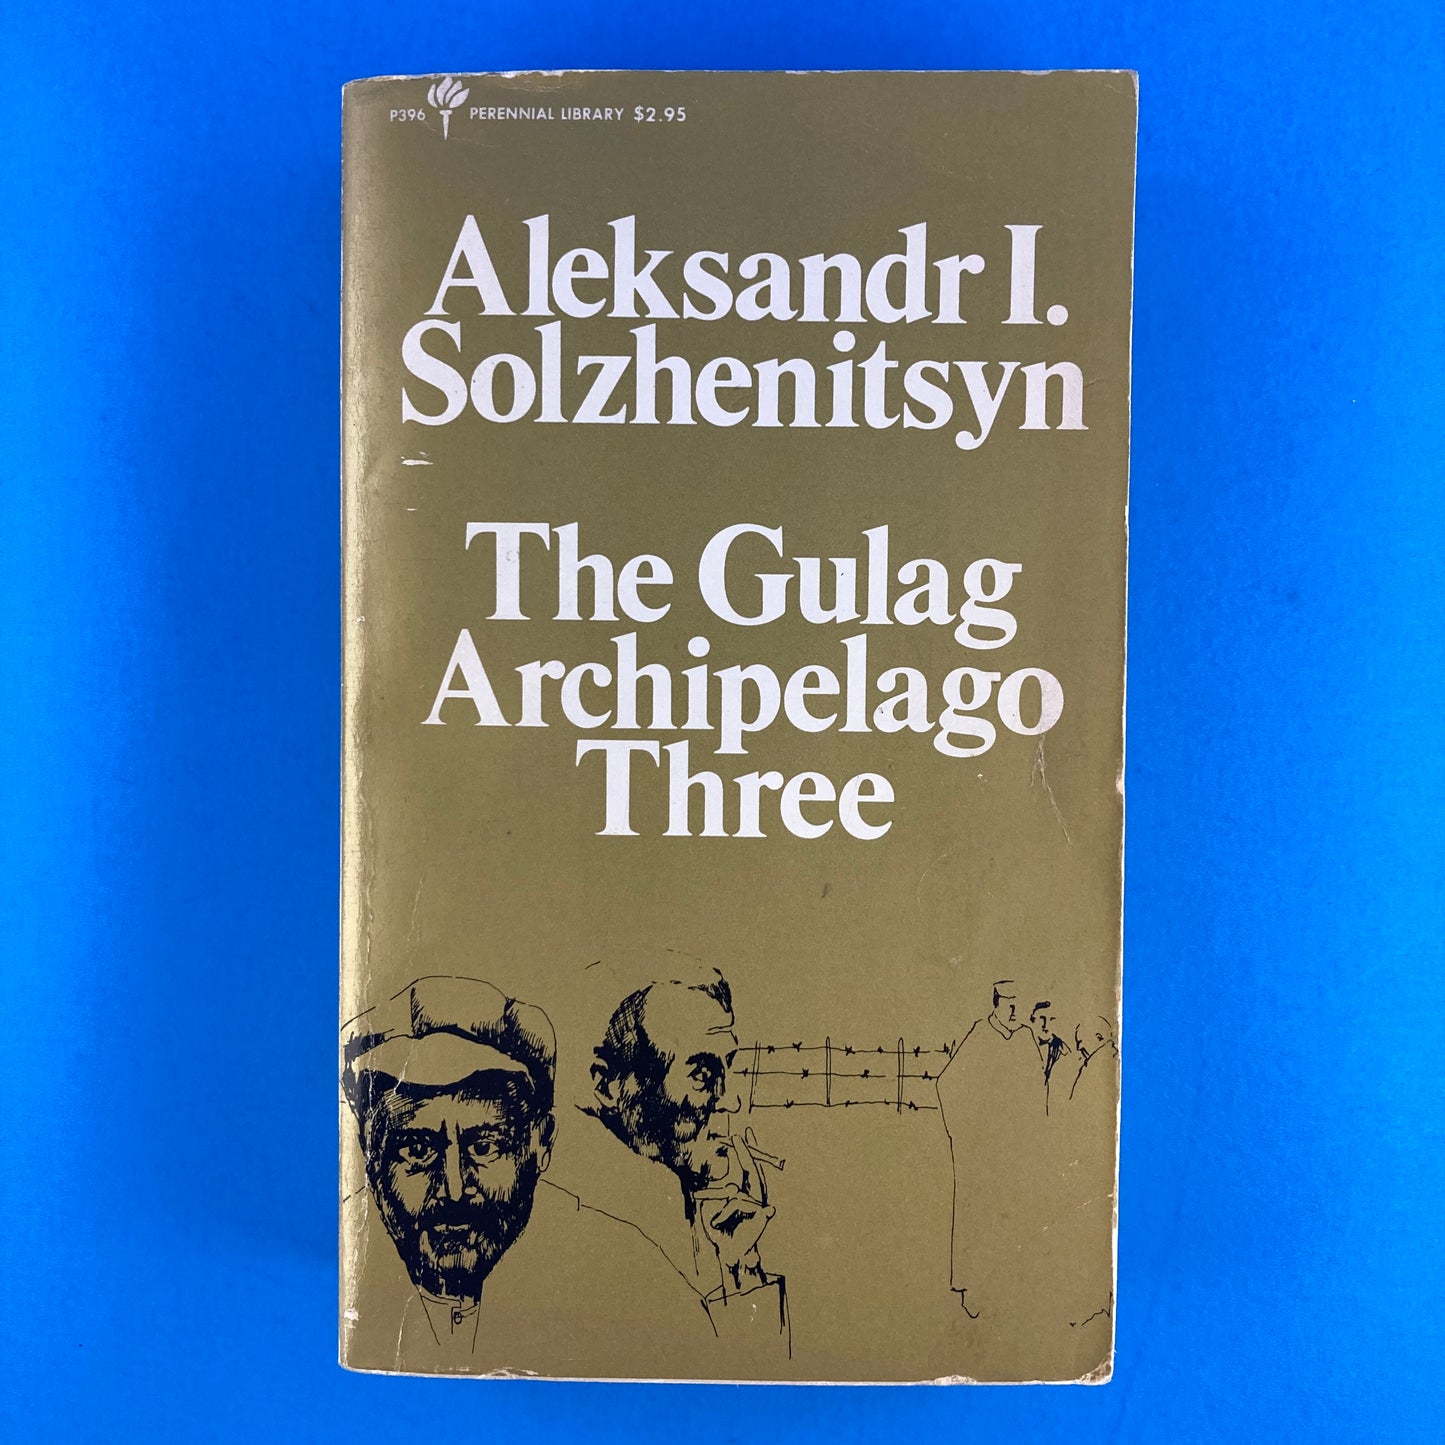 The Gulag Archipelago Three